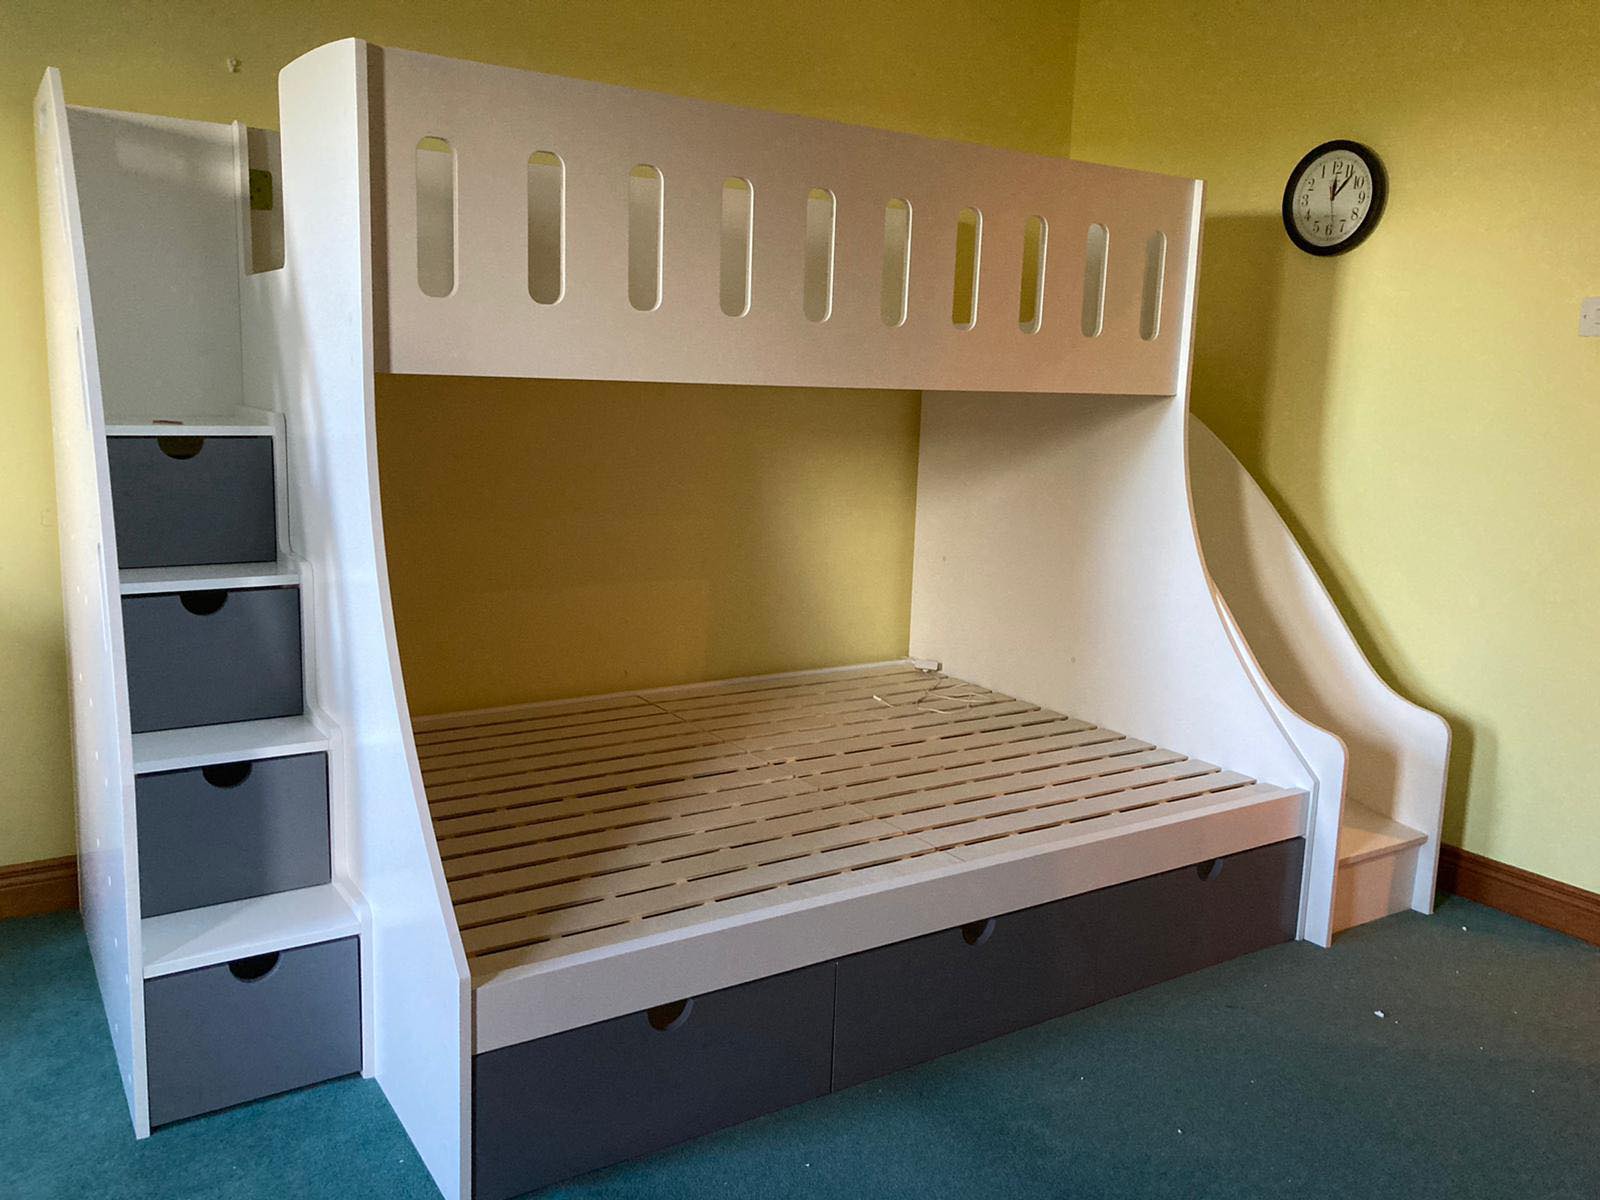 How to Custom Make Kids Beds